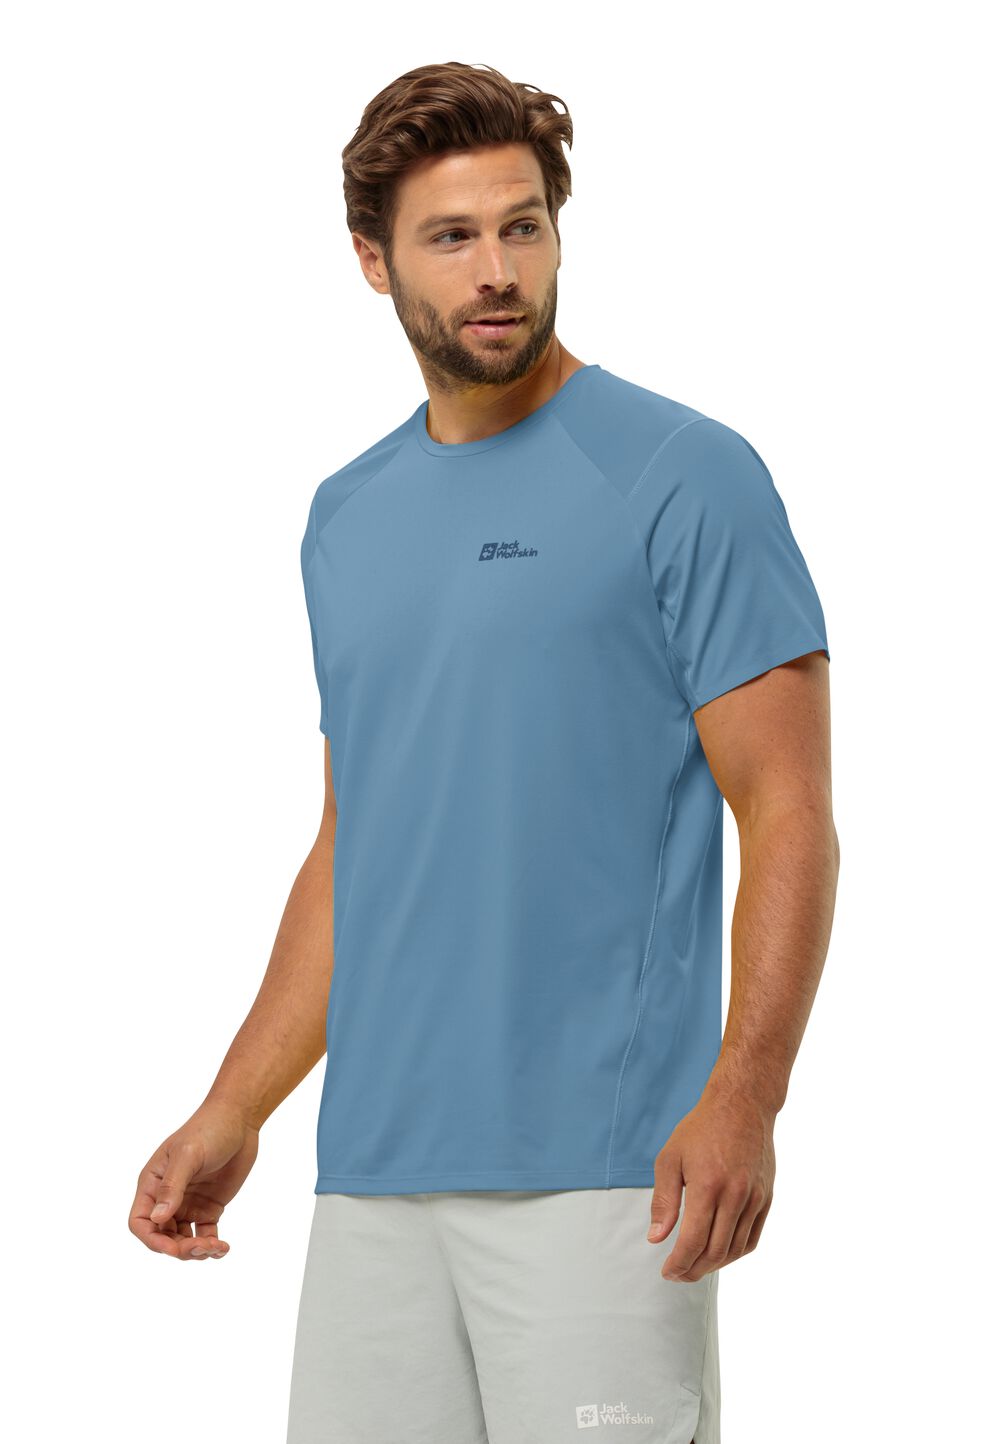 Jack Wolfskin Prelight Chill T-Shirt Men Functioneel shirt Heren M elemental blue elemental blue